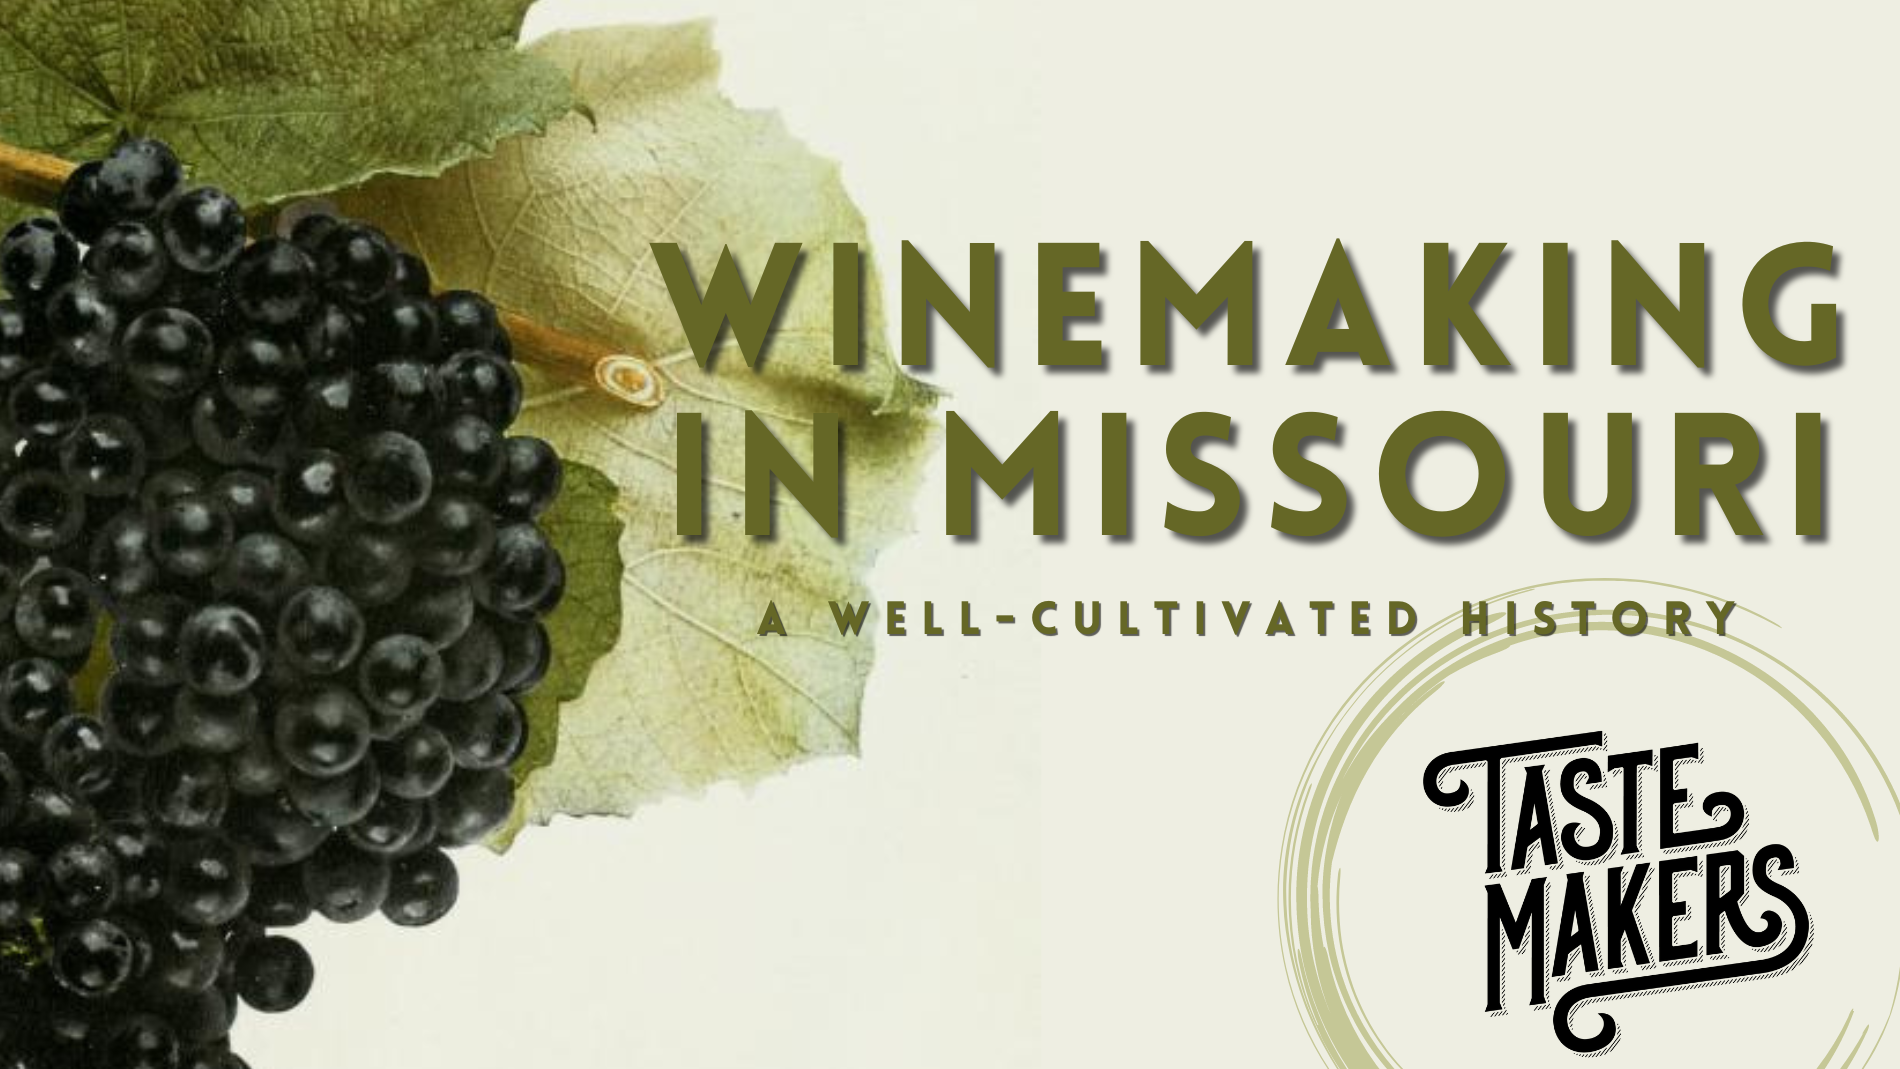 Winemaking in Missouri Special premieres in October 2022